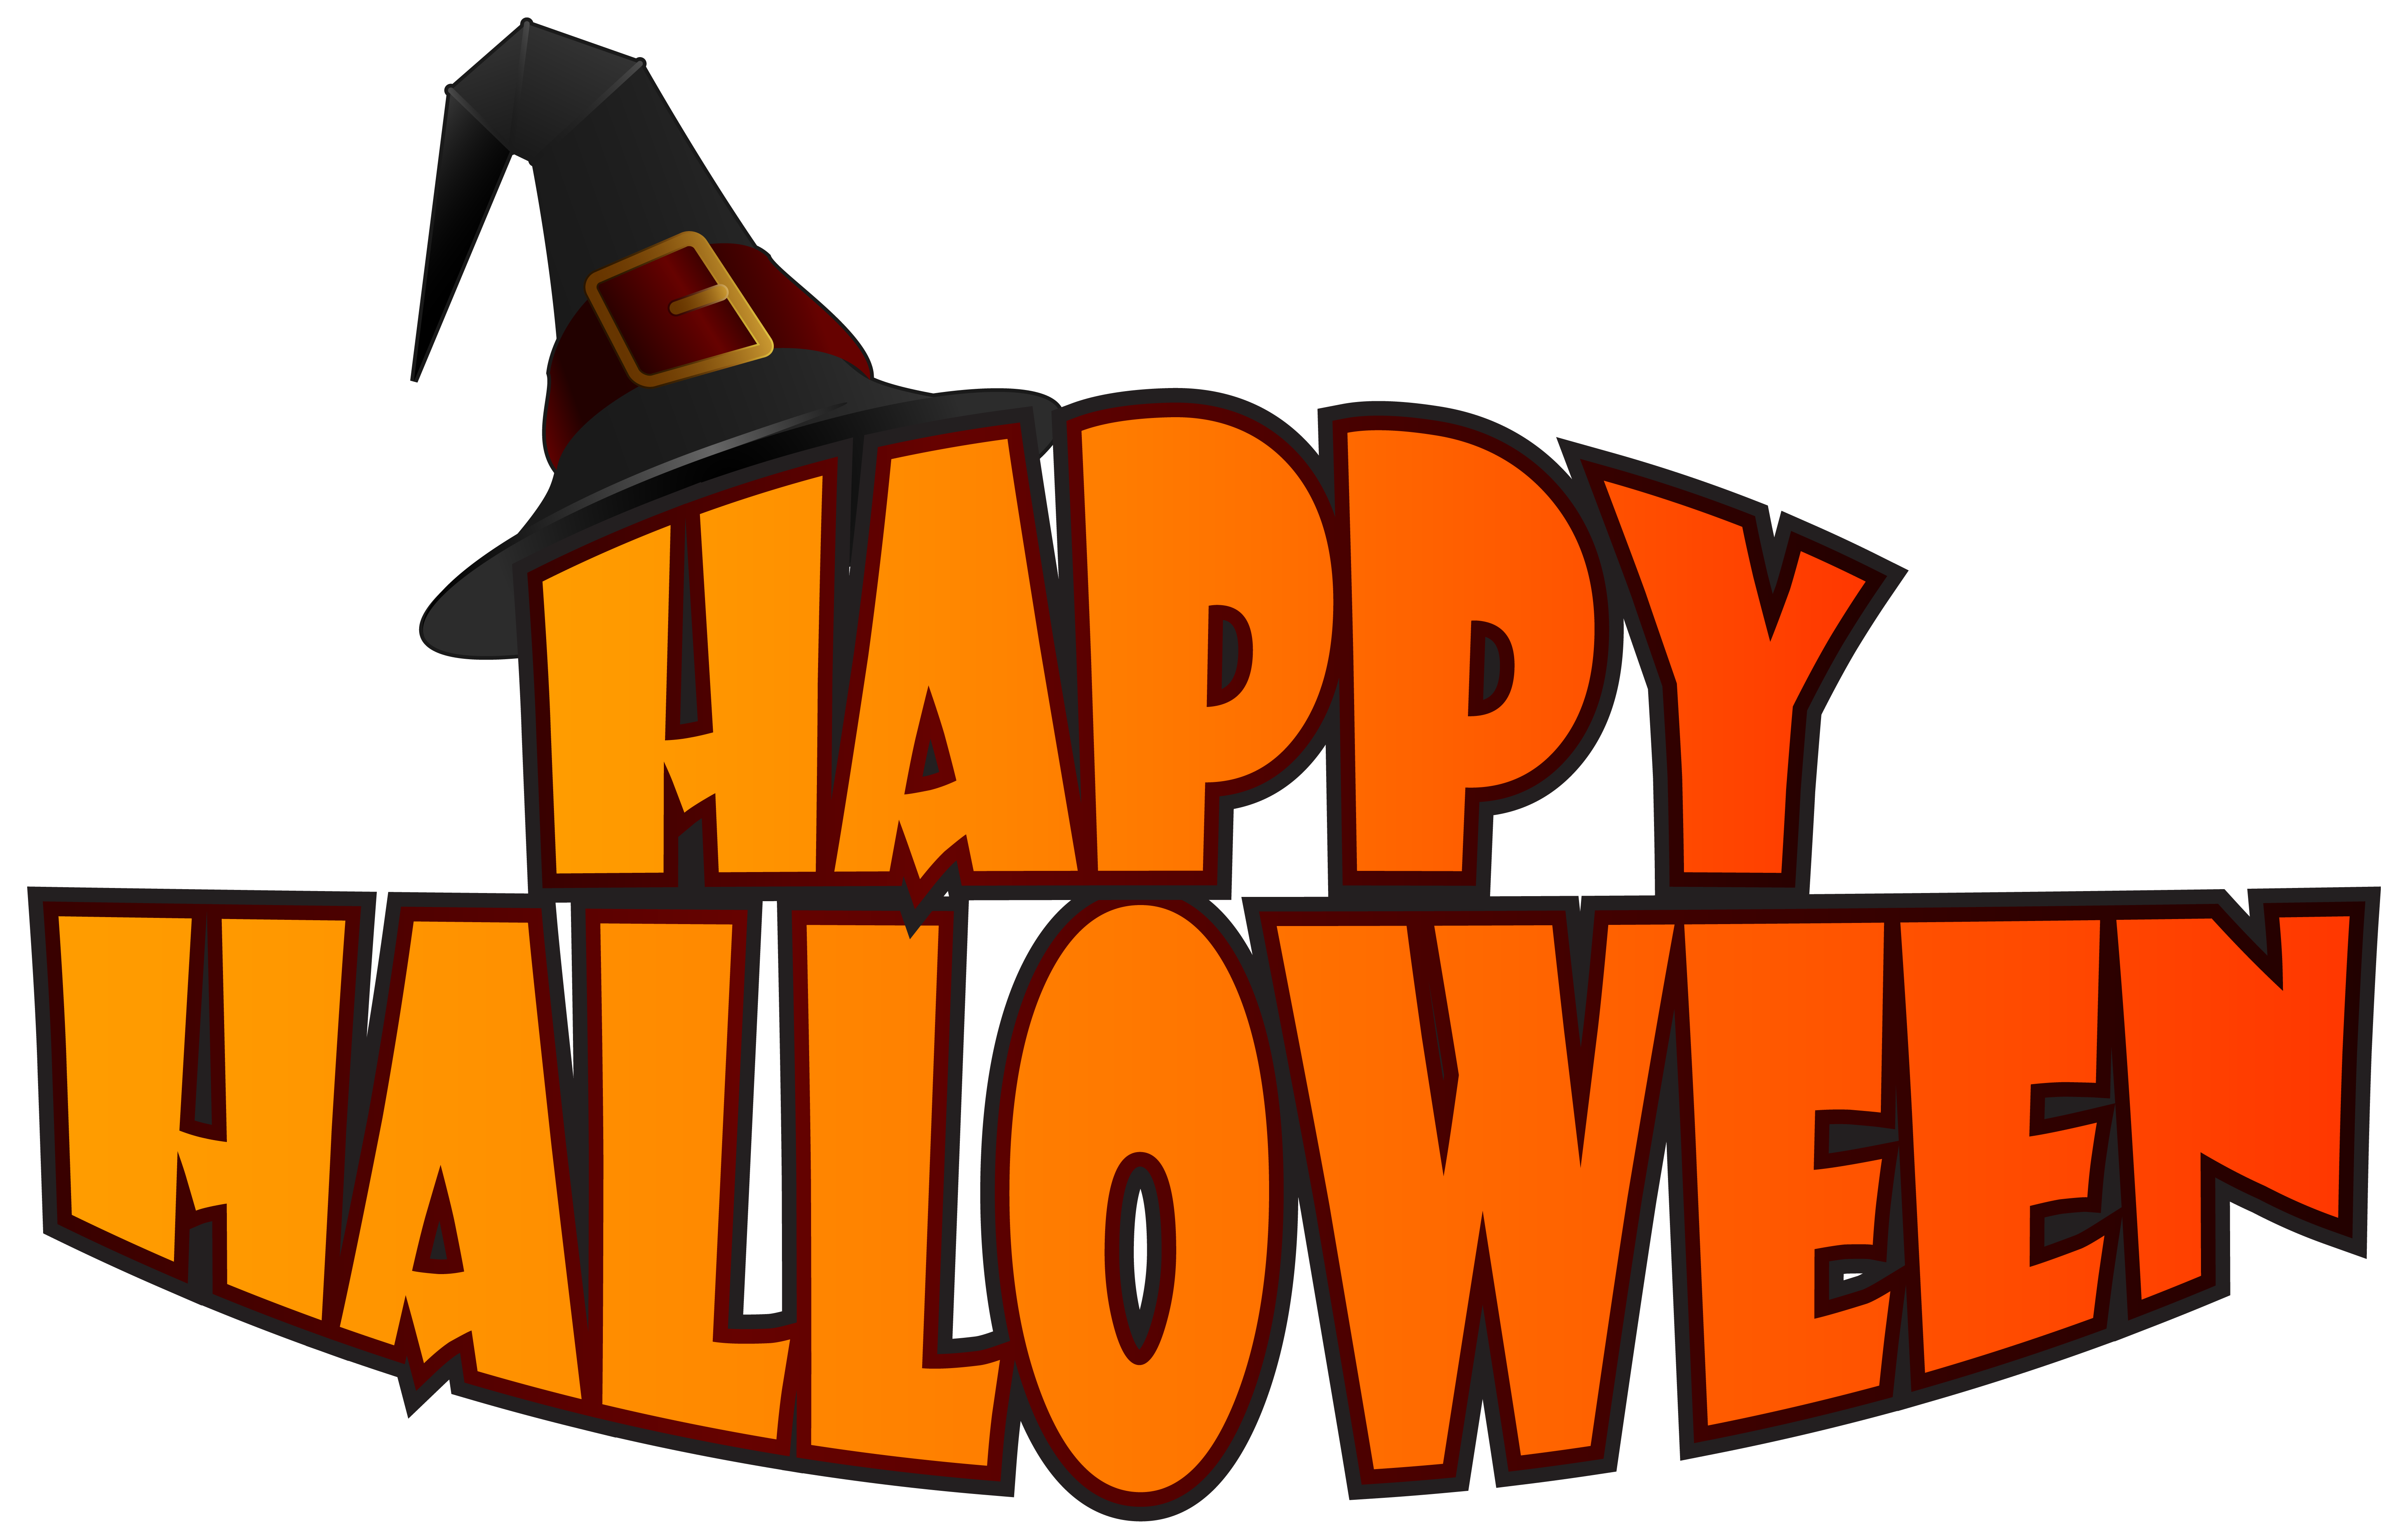 Free Printable Happy Halloween Images